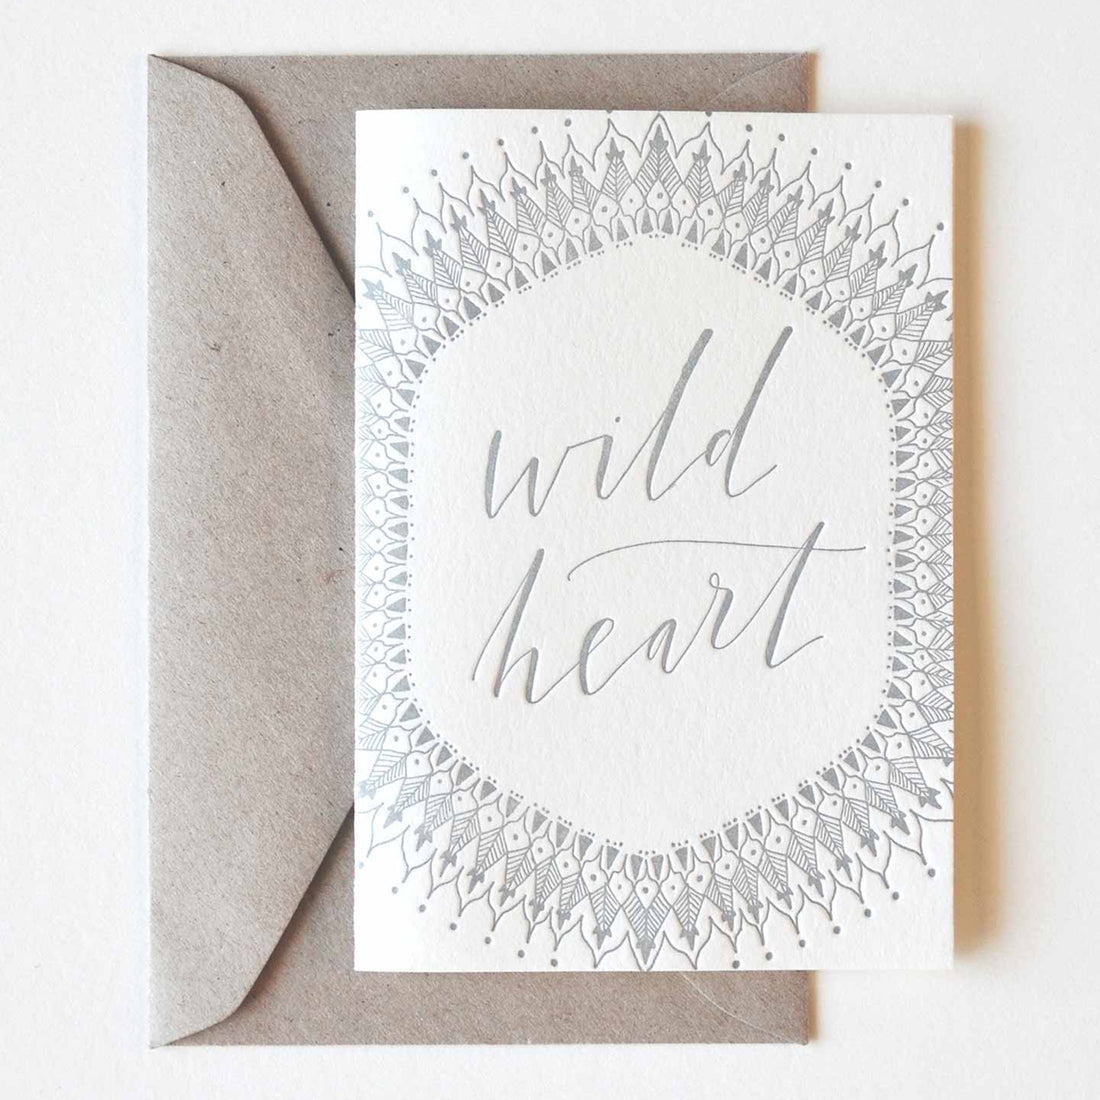 Wild Heart Greeting Card - Darling Spring